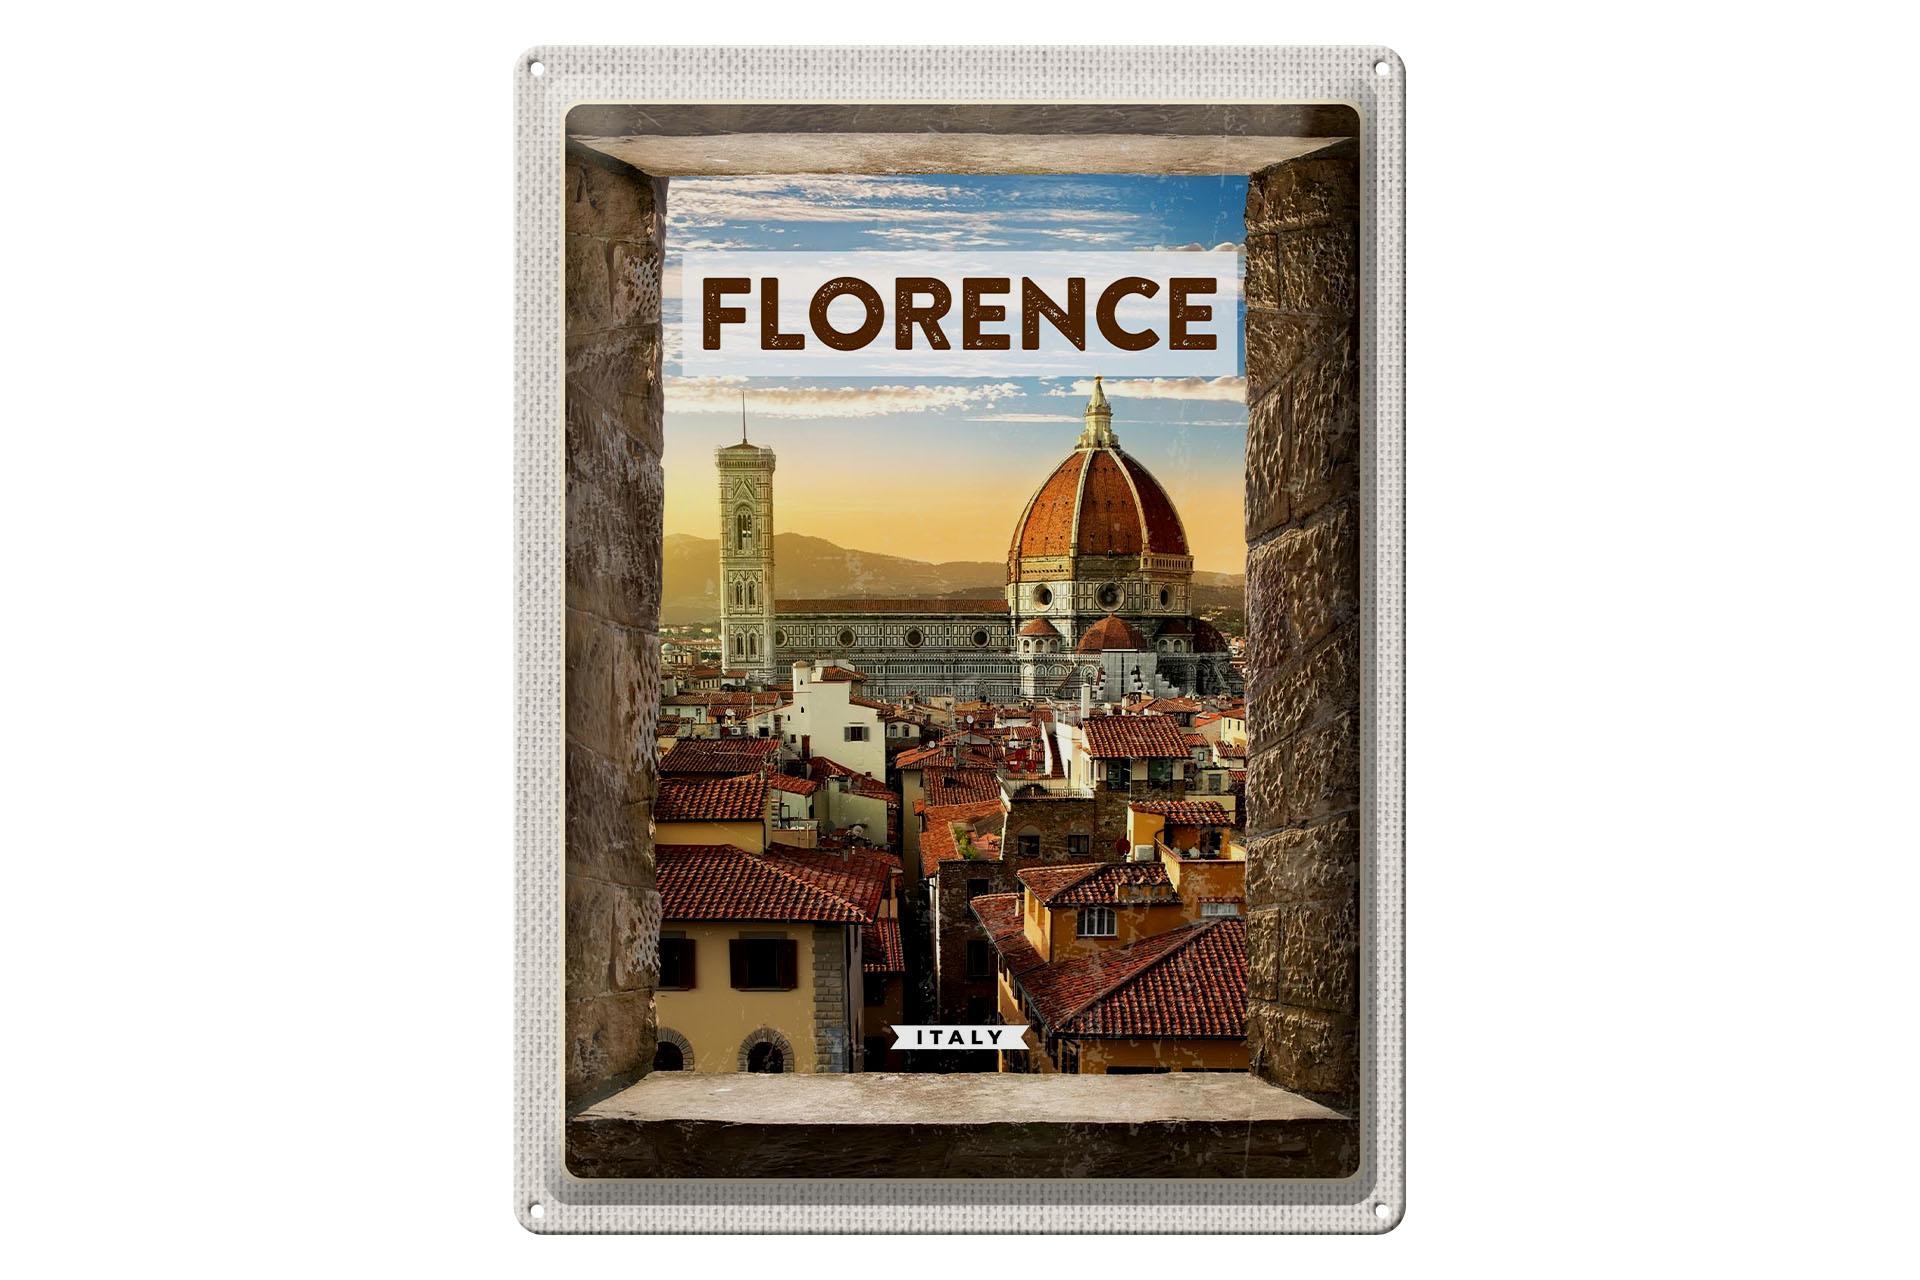 Blechschild Reise 30x40 cm Florence Italy italien Urlaub Toscana